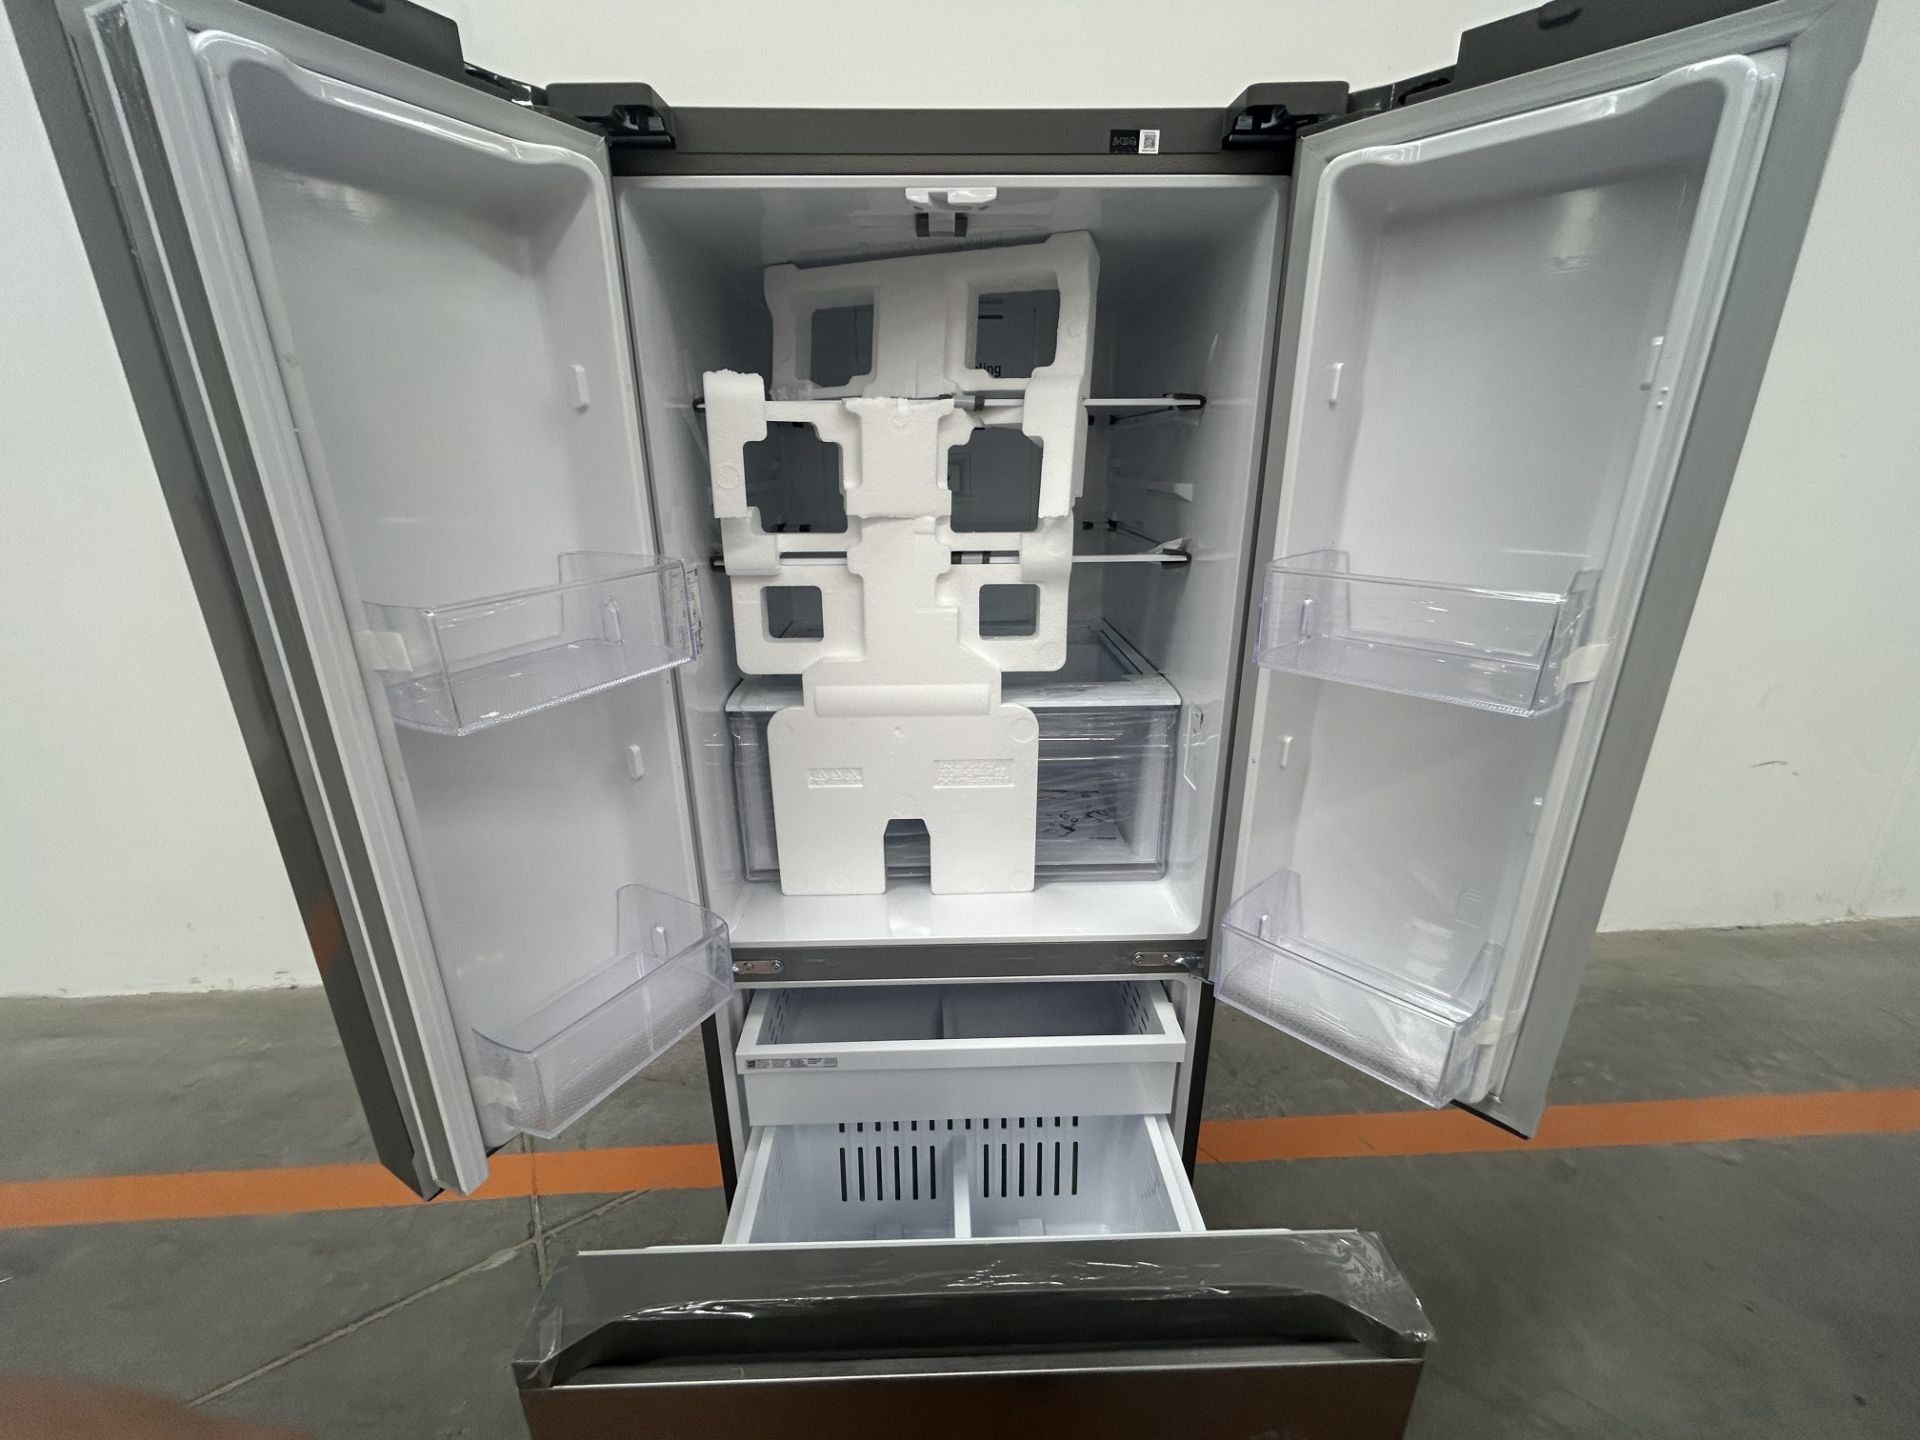 (NUEVO) Refrigerador Marca SAMSUNG, Modelo RF22A4010S9, Serie 1844T, Color GRIS - Image 4 of 4